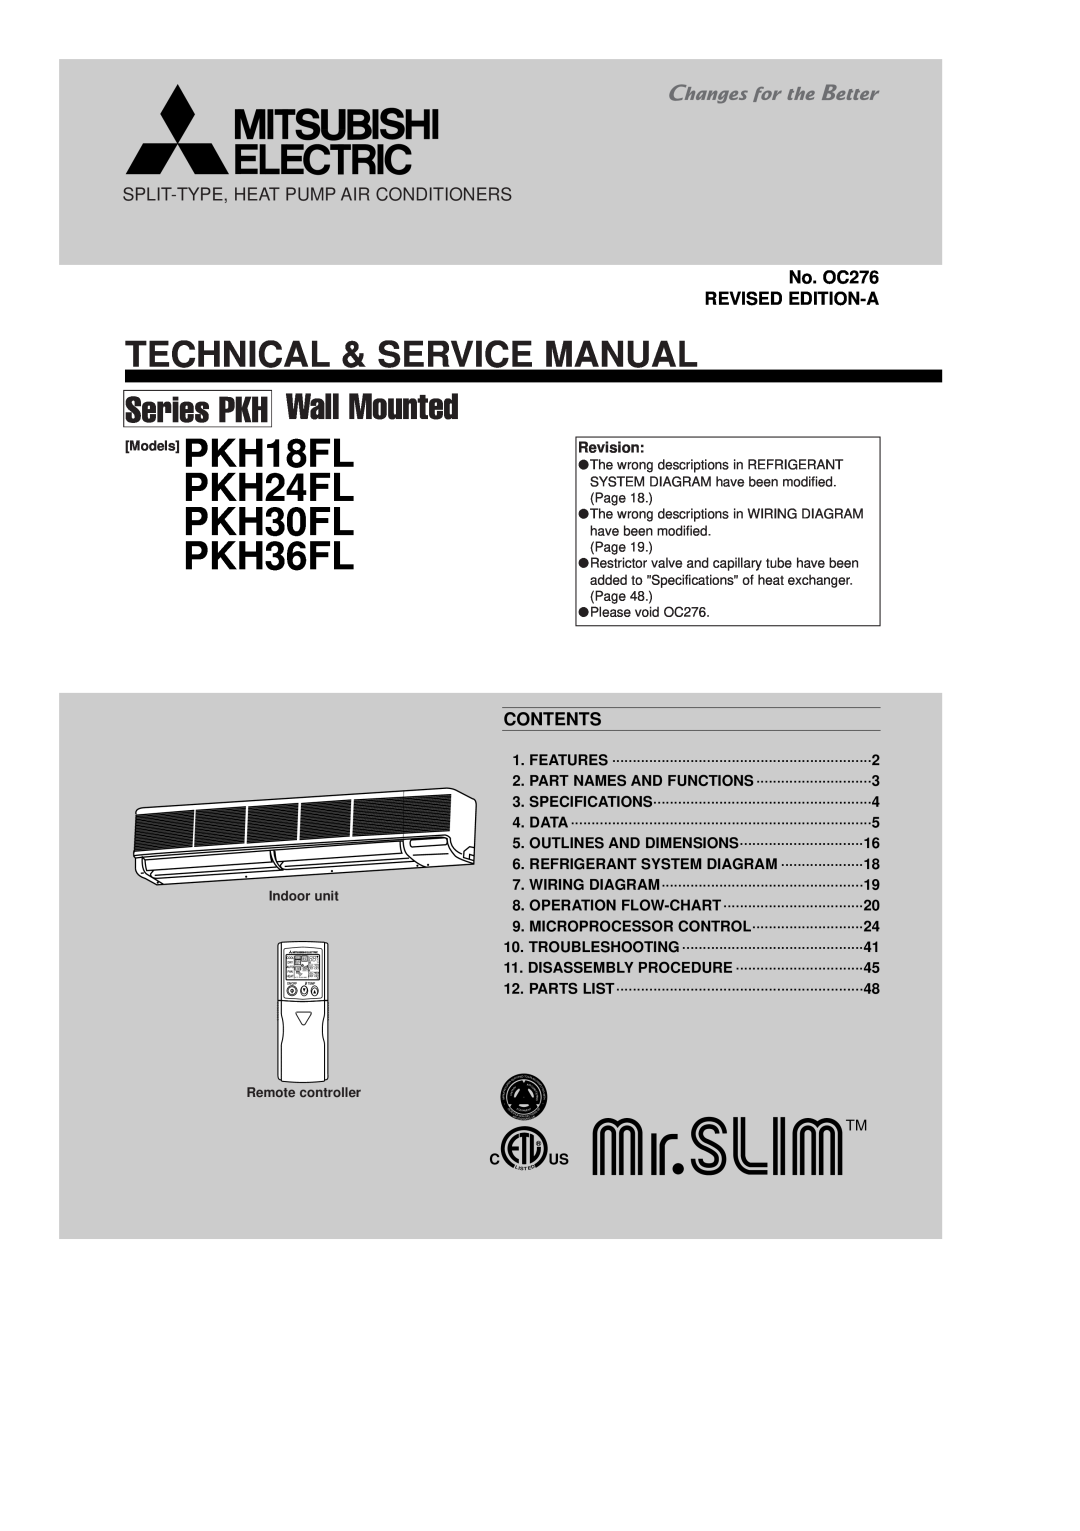 Mitsubishi Electronics PKH18FL service manual No. OC276 REVISED EDITION-A, Contents, PKH24FL PKH30FL PKH36FL, Revision 